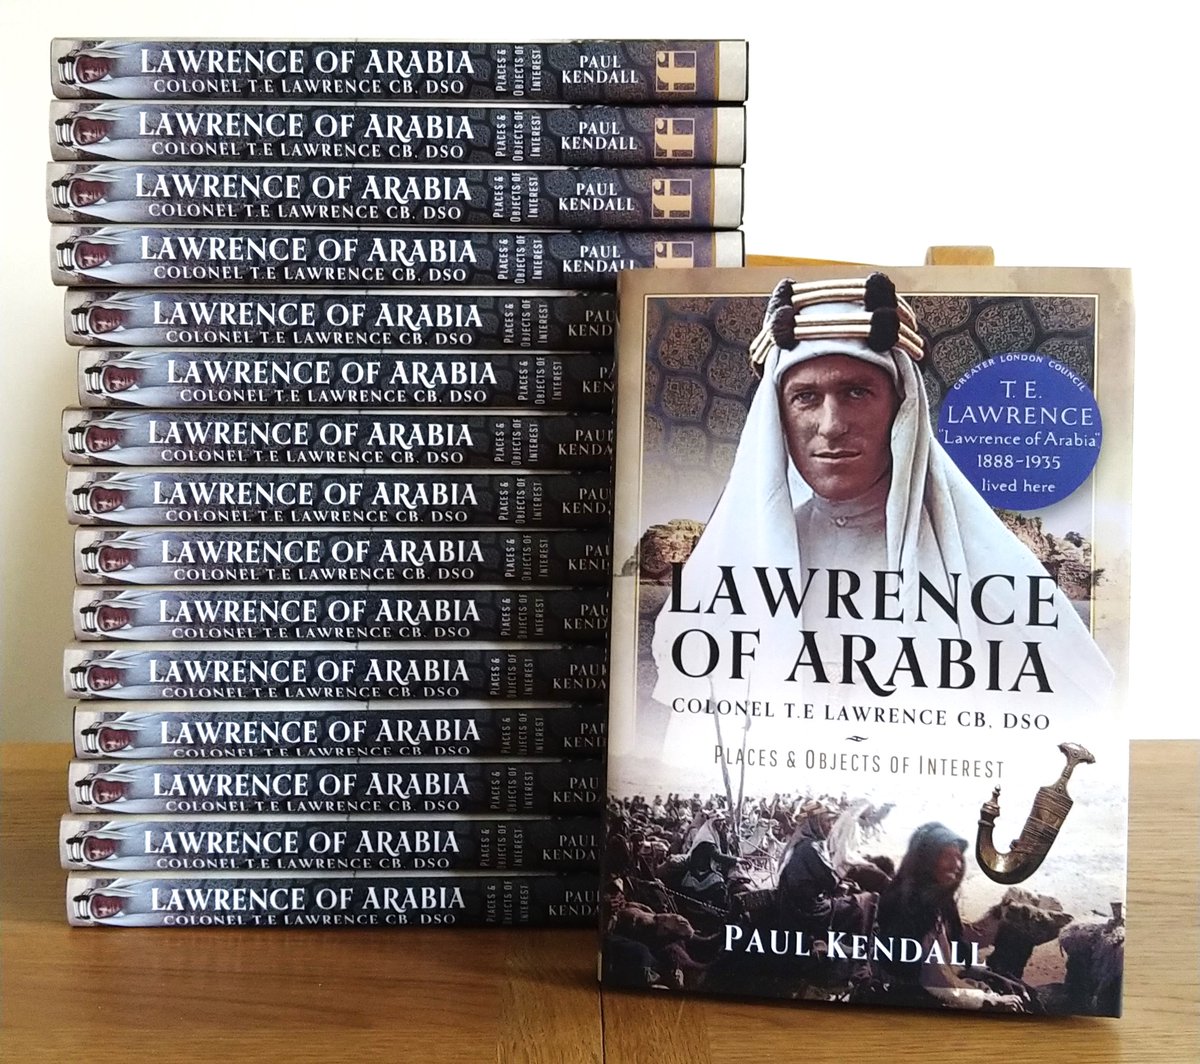 Lawrence of Arabia by Paul Kendall @penswordbooks

Available from @penandswordbooks

buff.ly/47pzpSM

#LawrenceofArabia #TELawrence #Firstworldwar #worldwarone #RoyalAirForce #BritishArmy #History #MiddleEast #Biography #worldwarI #modernhistory